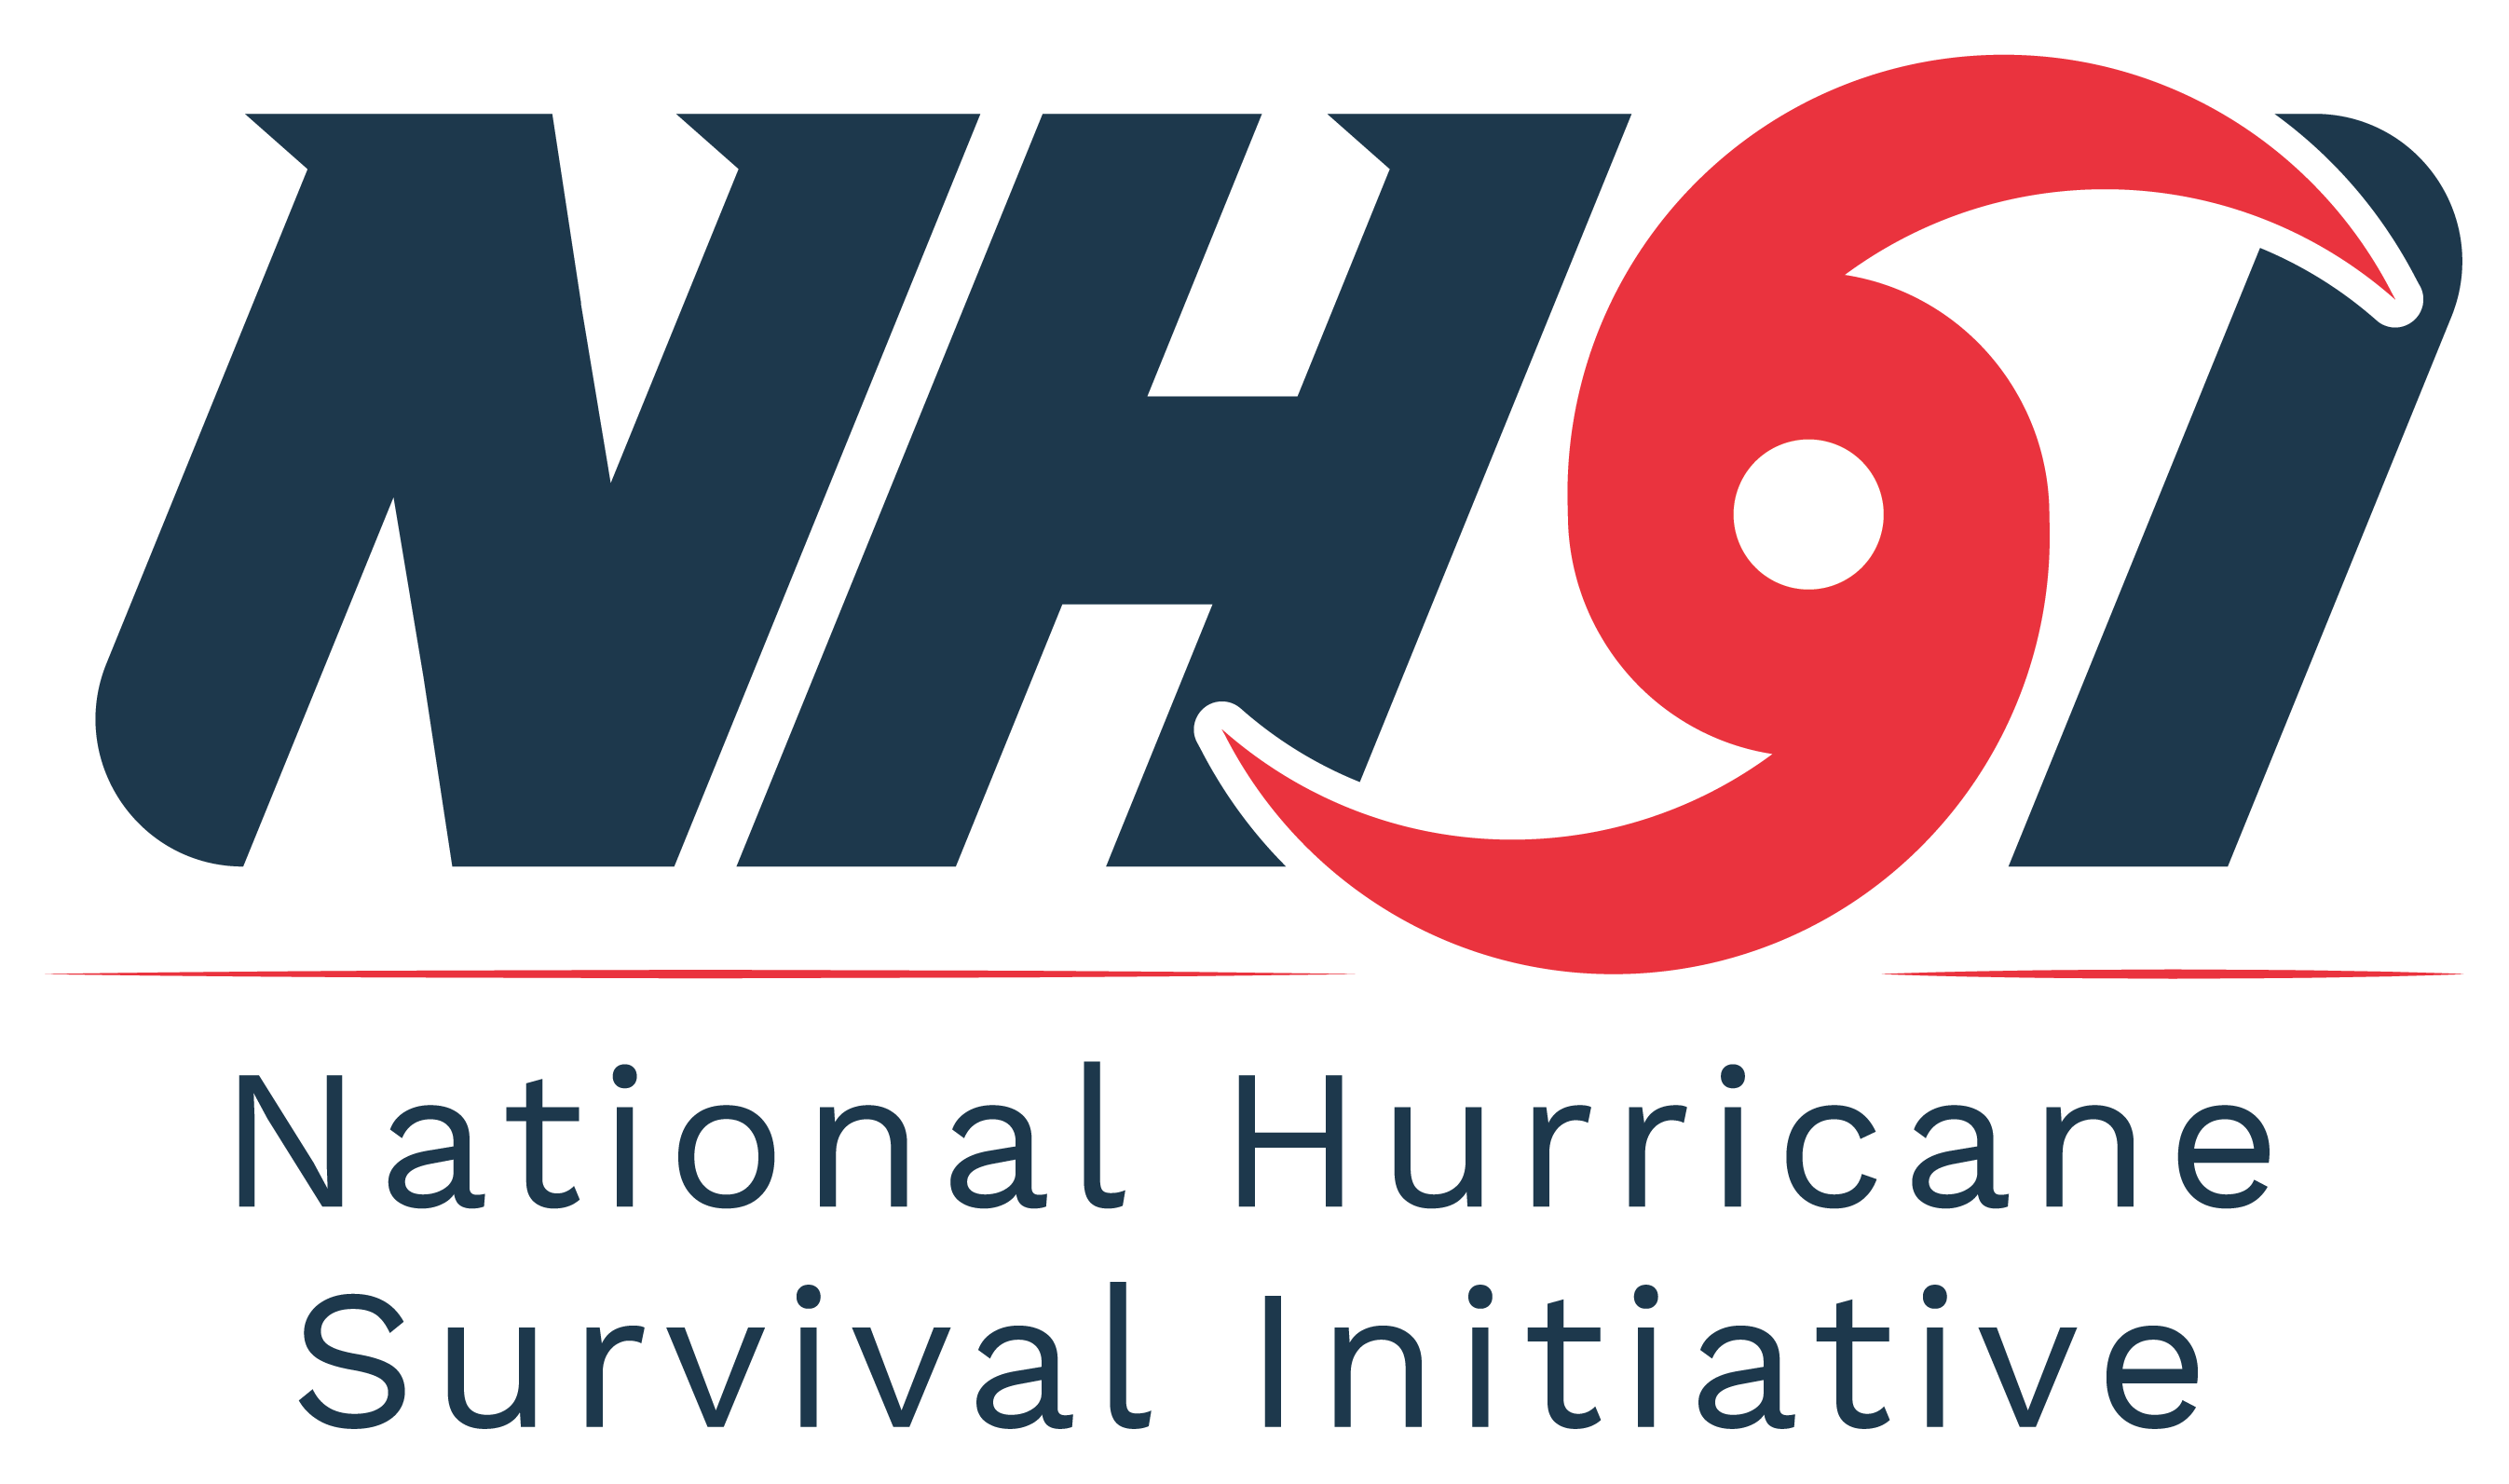 Hurricane Safety